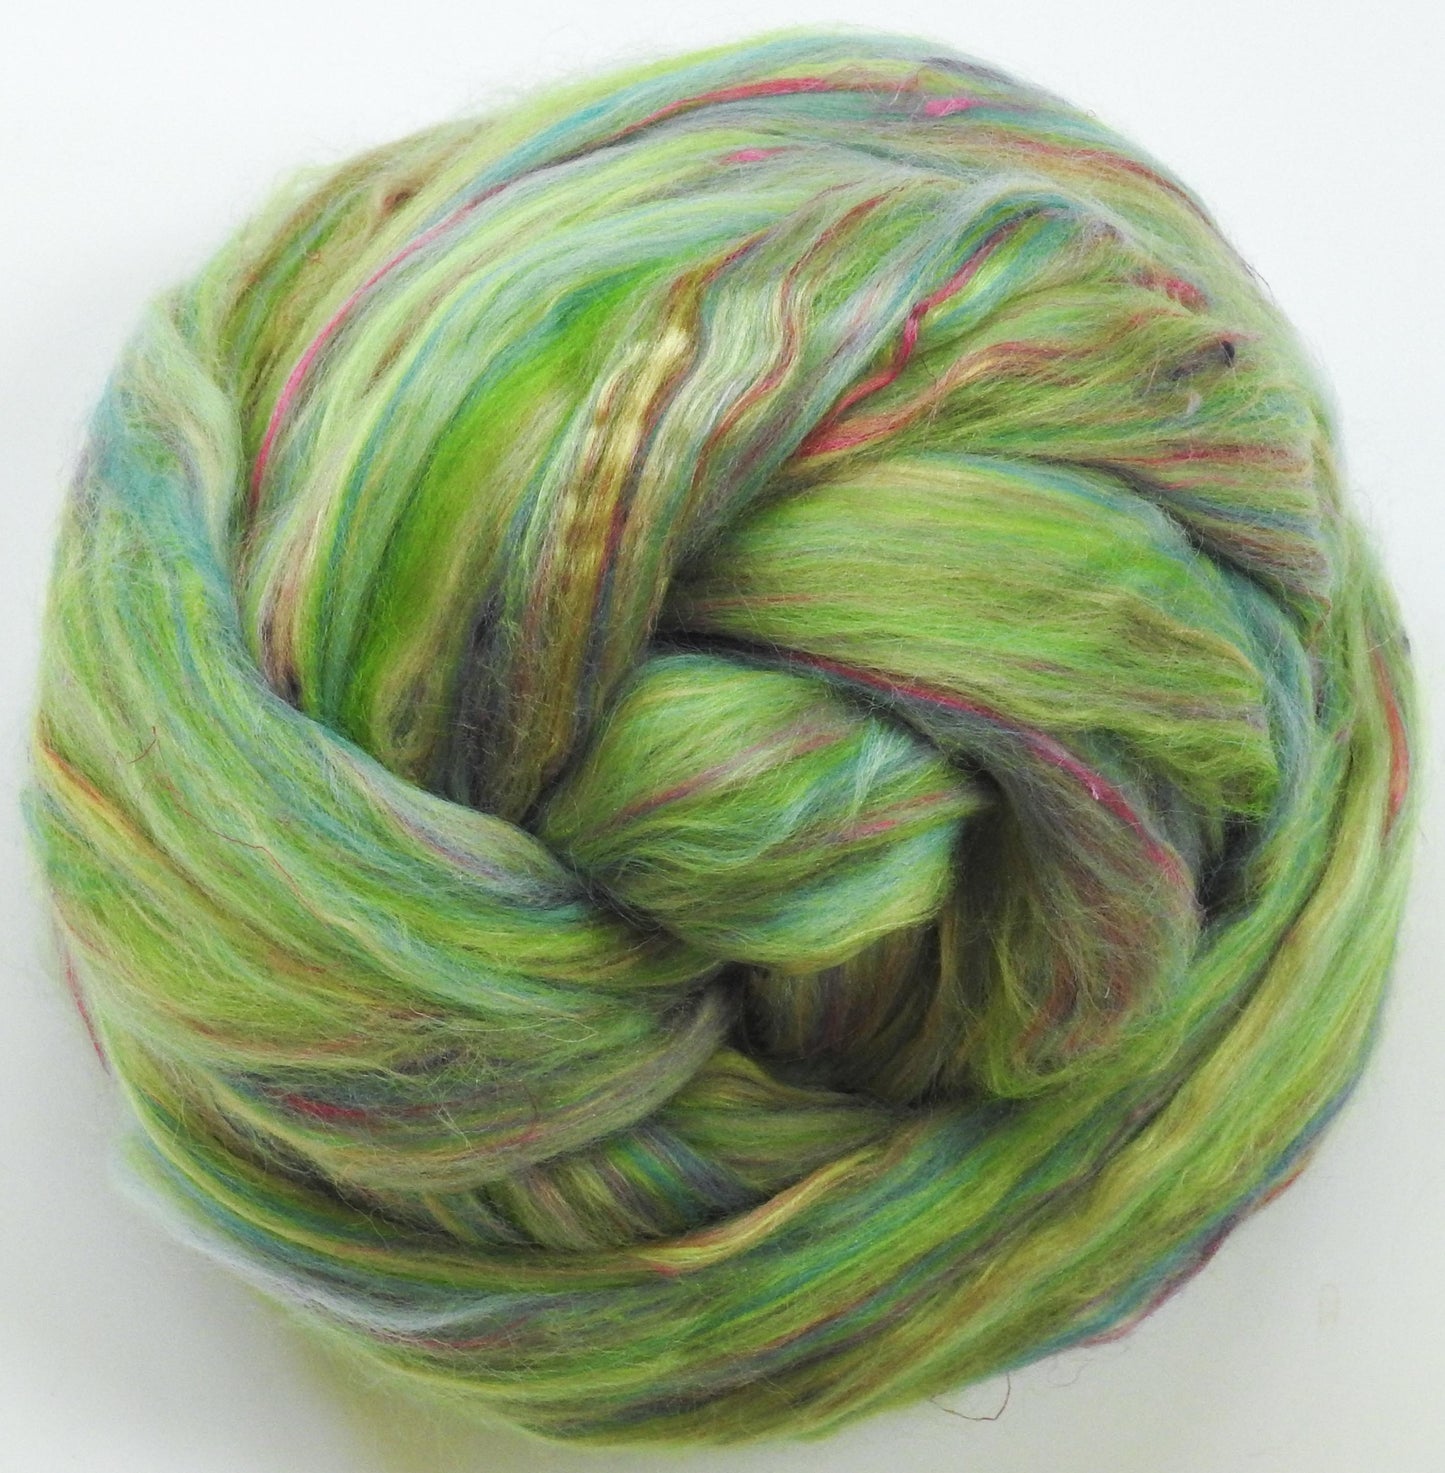 Leaf By Niggle - Merino/Mulberry silk/Tweed Blend /Flax (50/25/15/10)